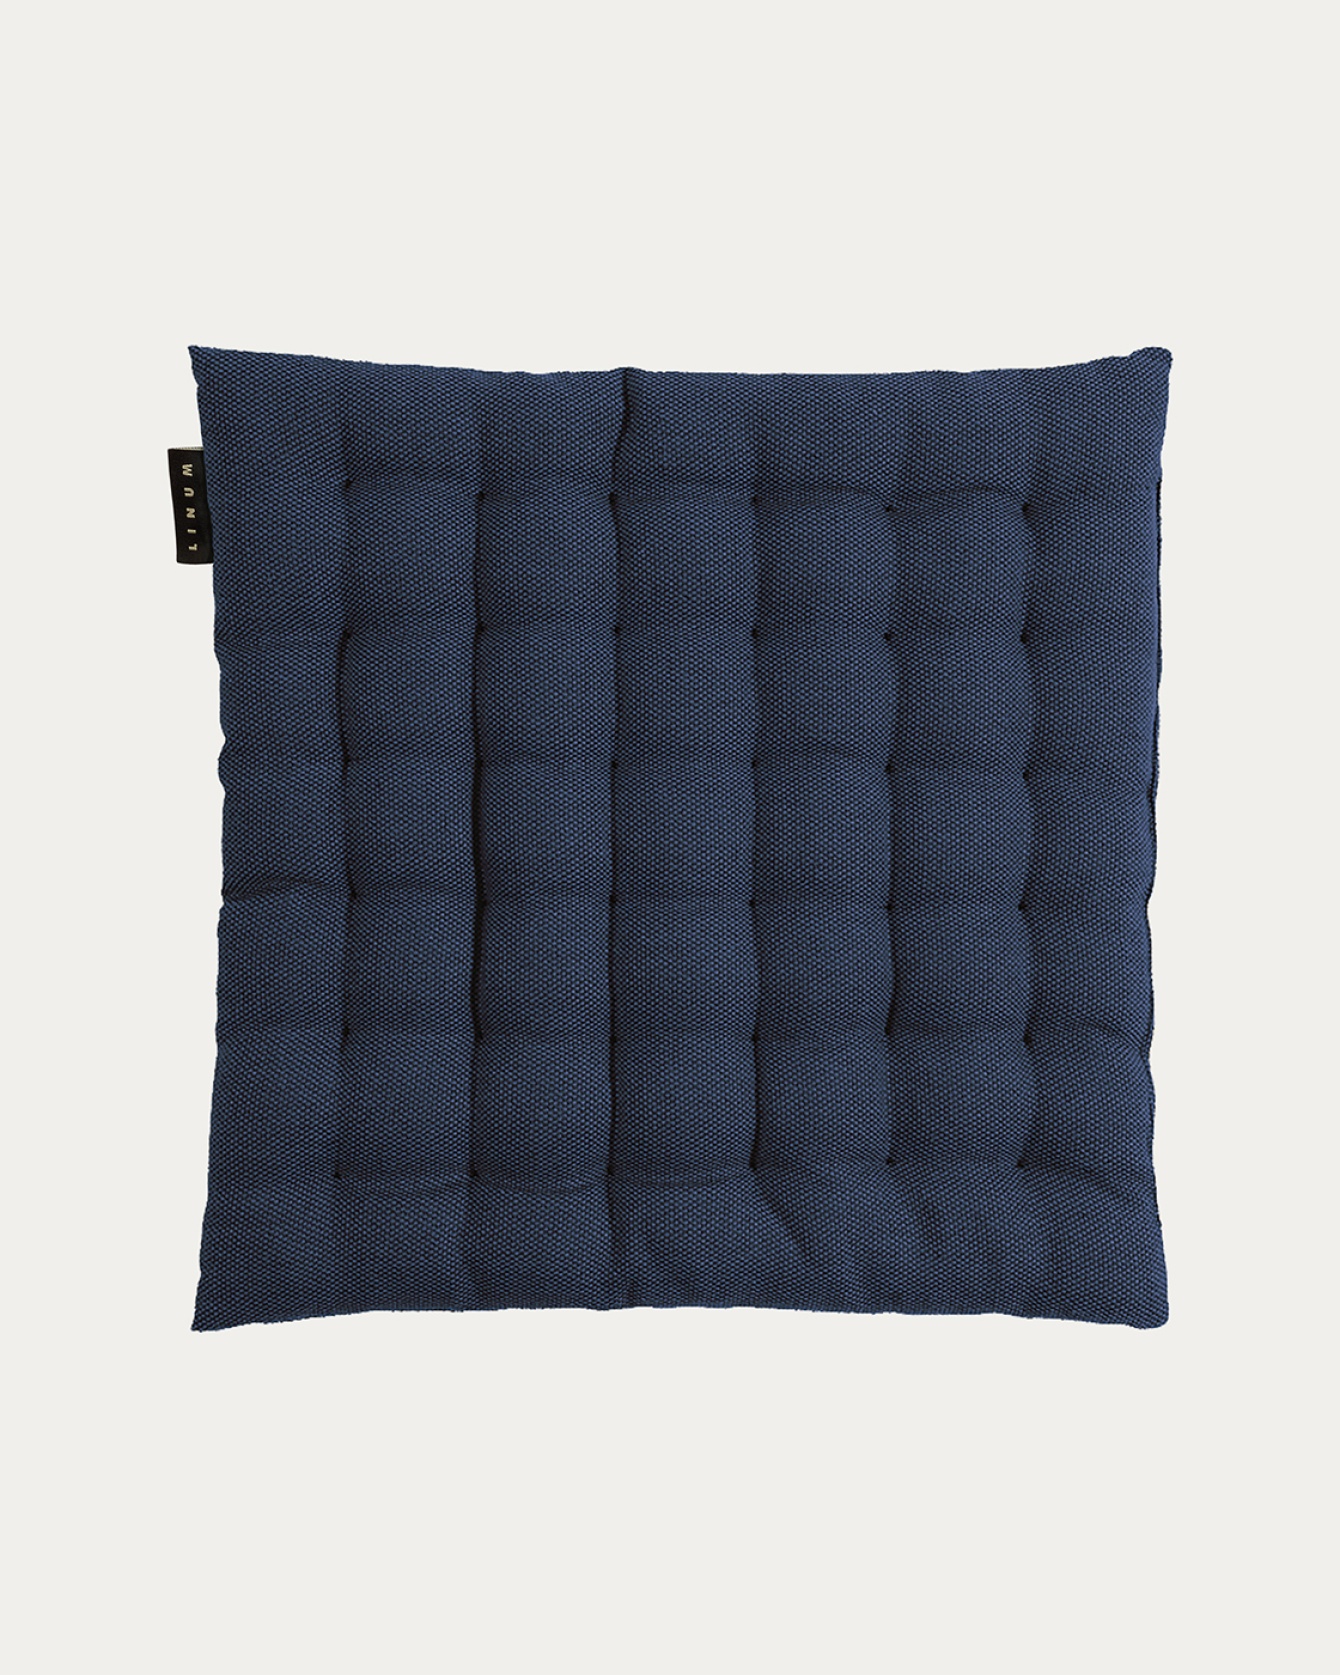 PEPPER Seat cushion 40x40 cm Ink blue